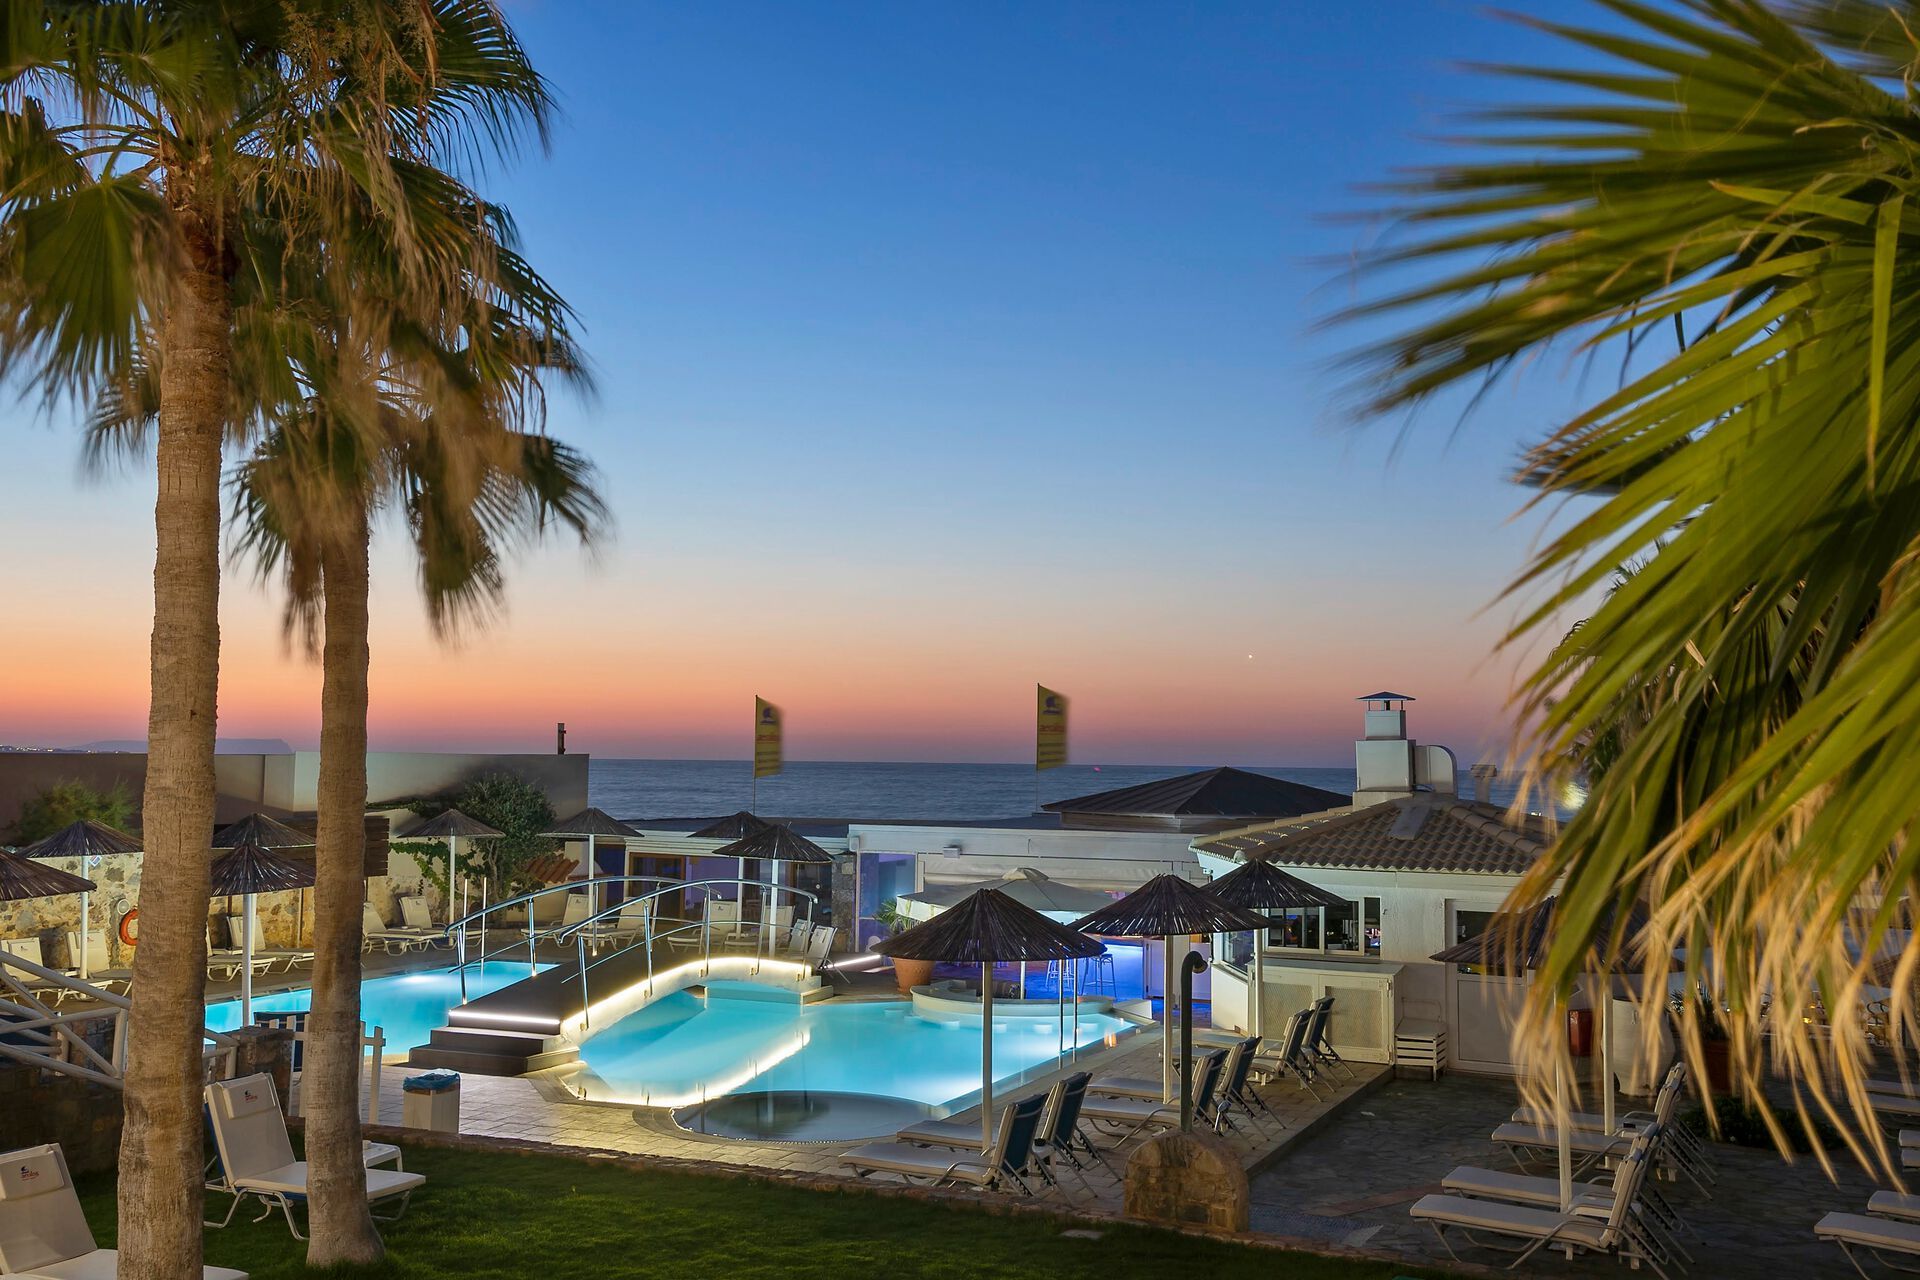 Crète - Malia - Grèce - Iles grecques - Hôtel Aeolos Beach 3*